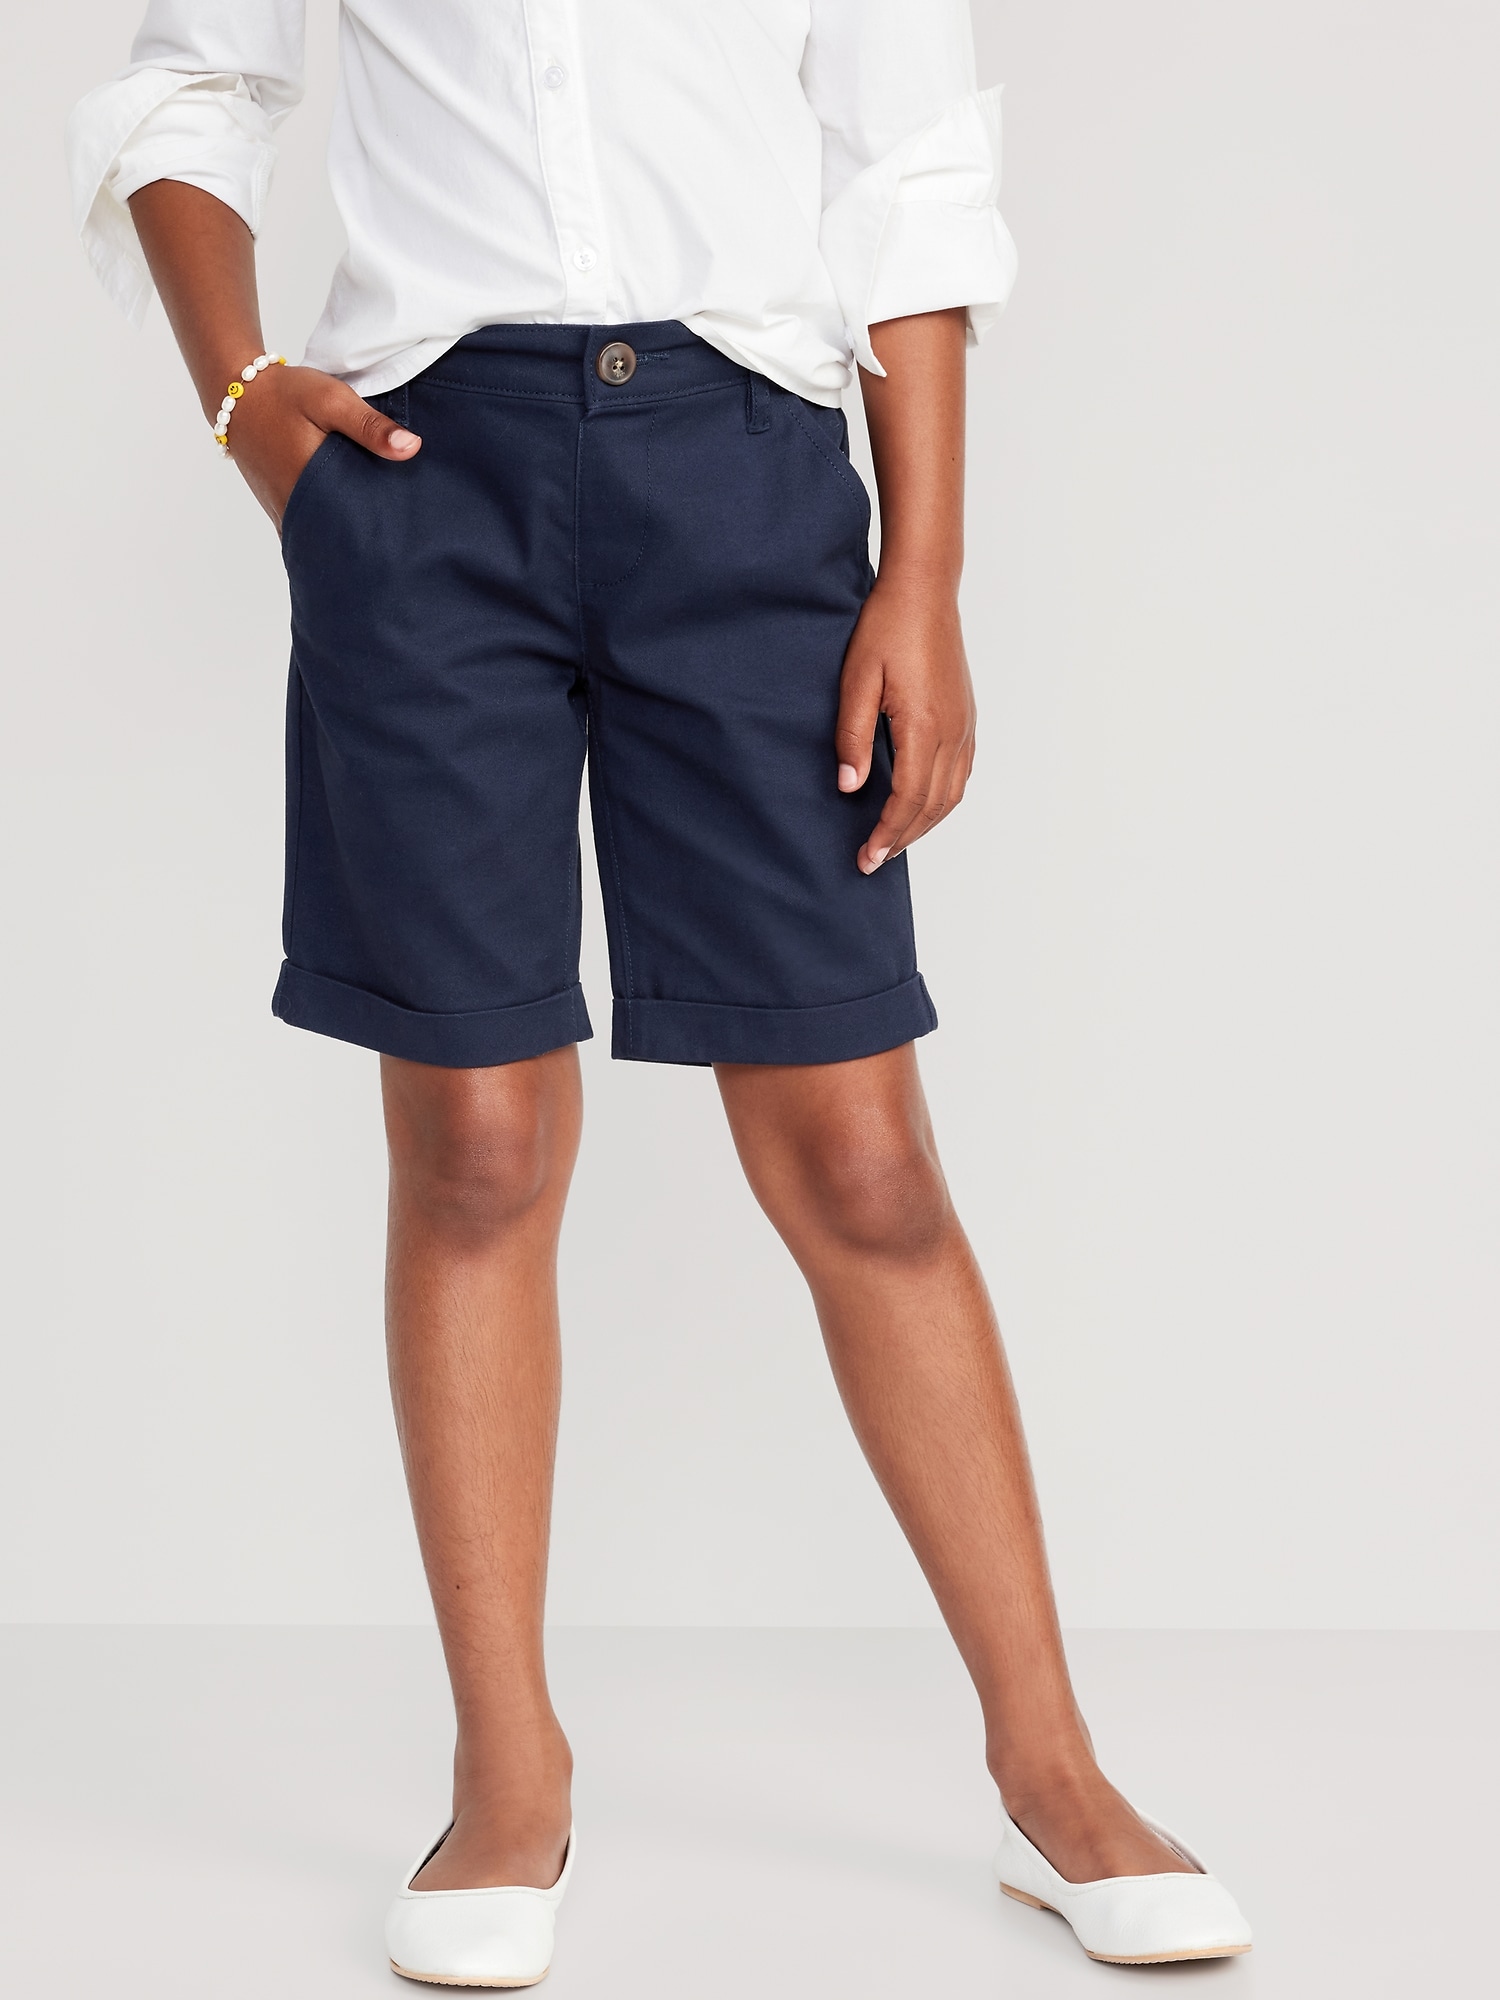 Shorts | Navy Old